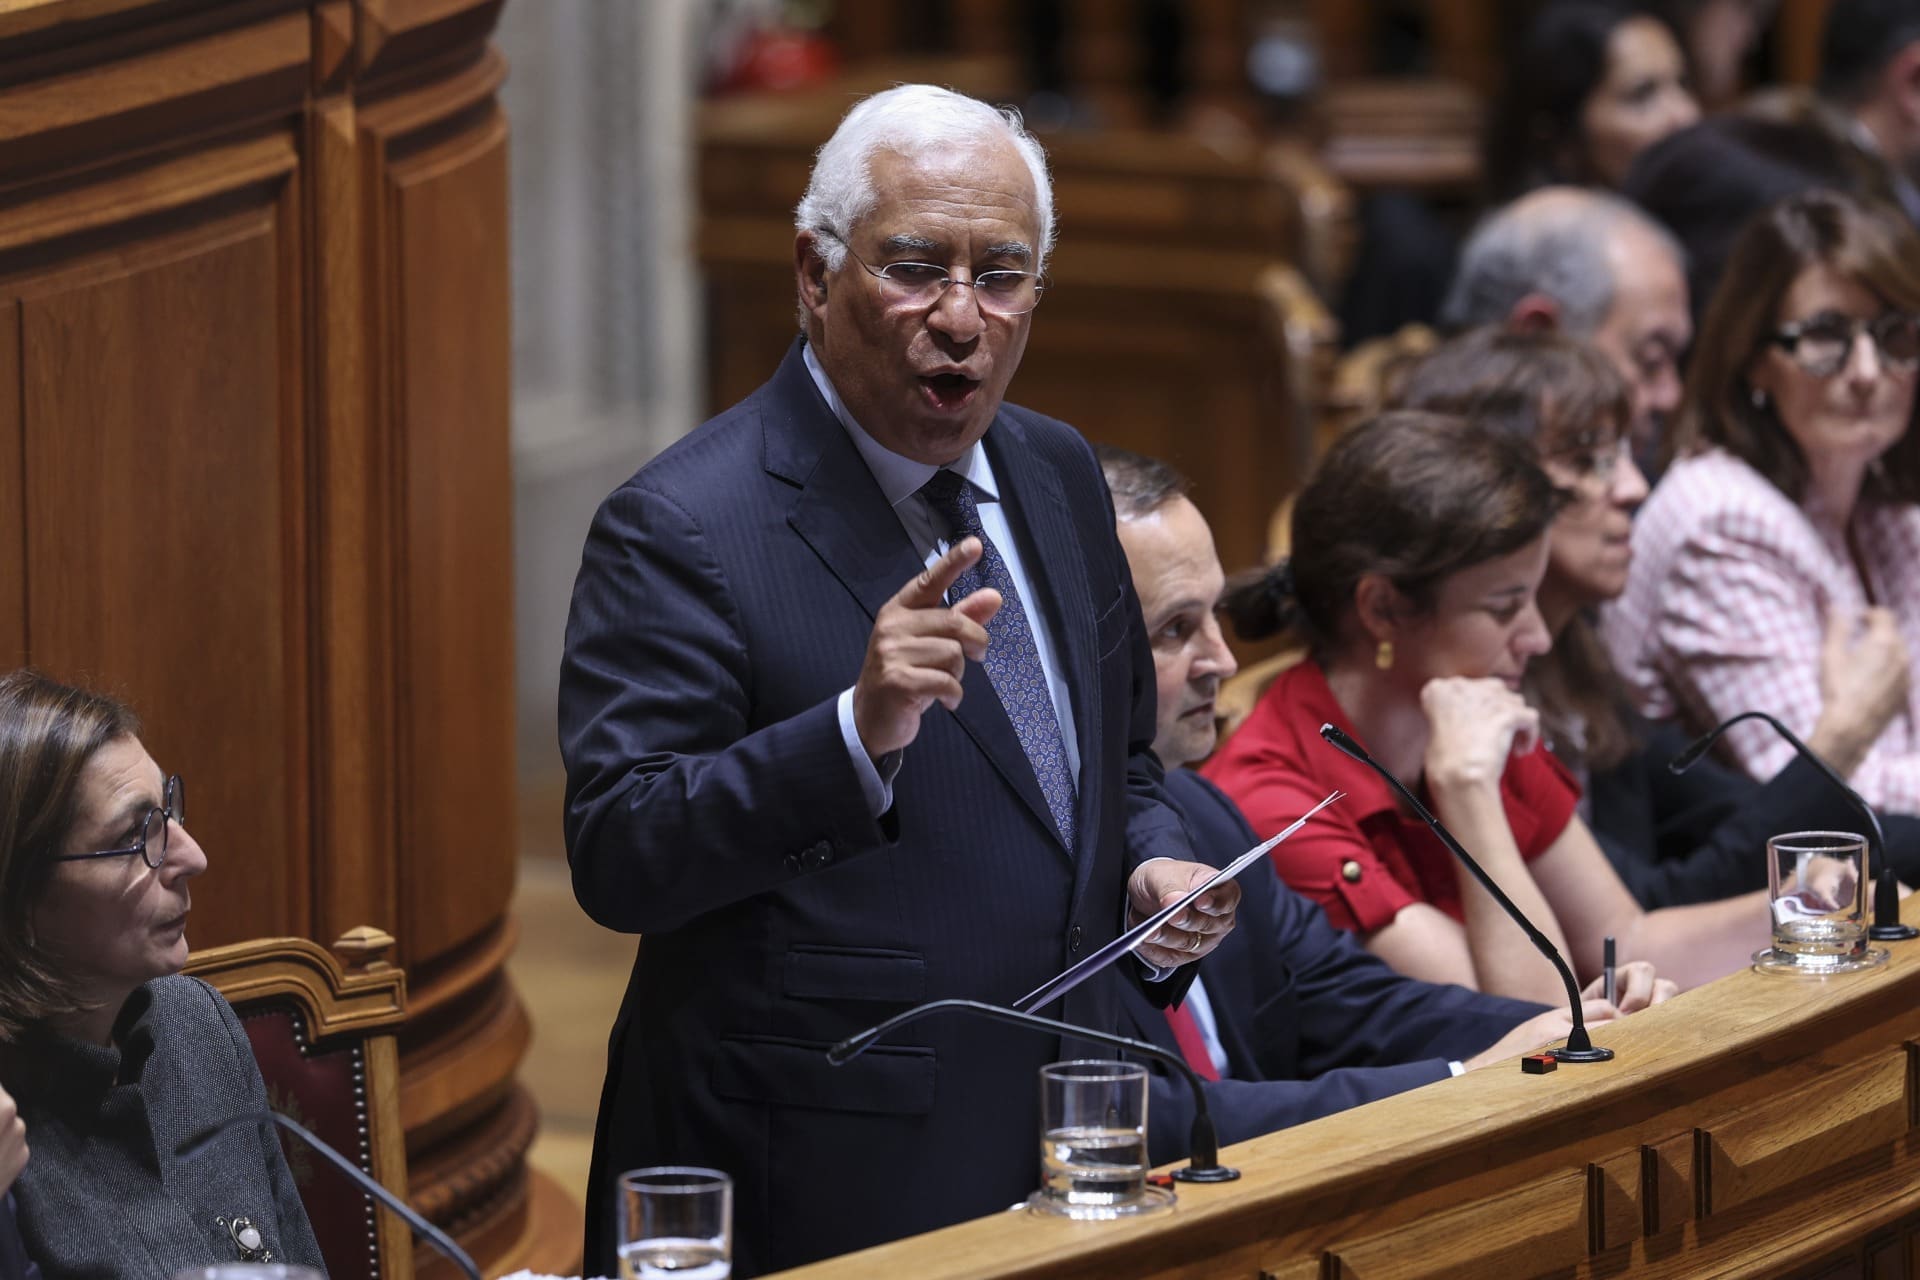 OE2024: Costa acusa Ventura de cobardia após vídeo gravado nos corredores do parlamento